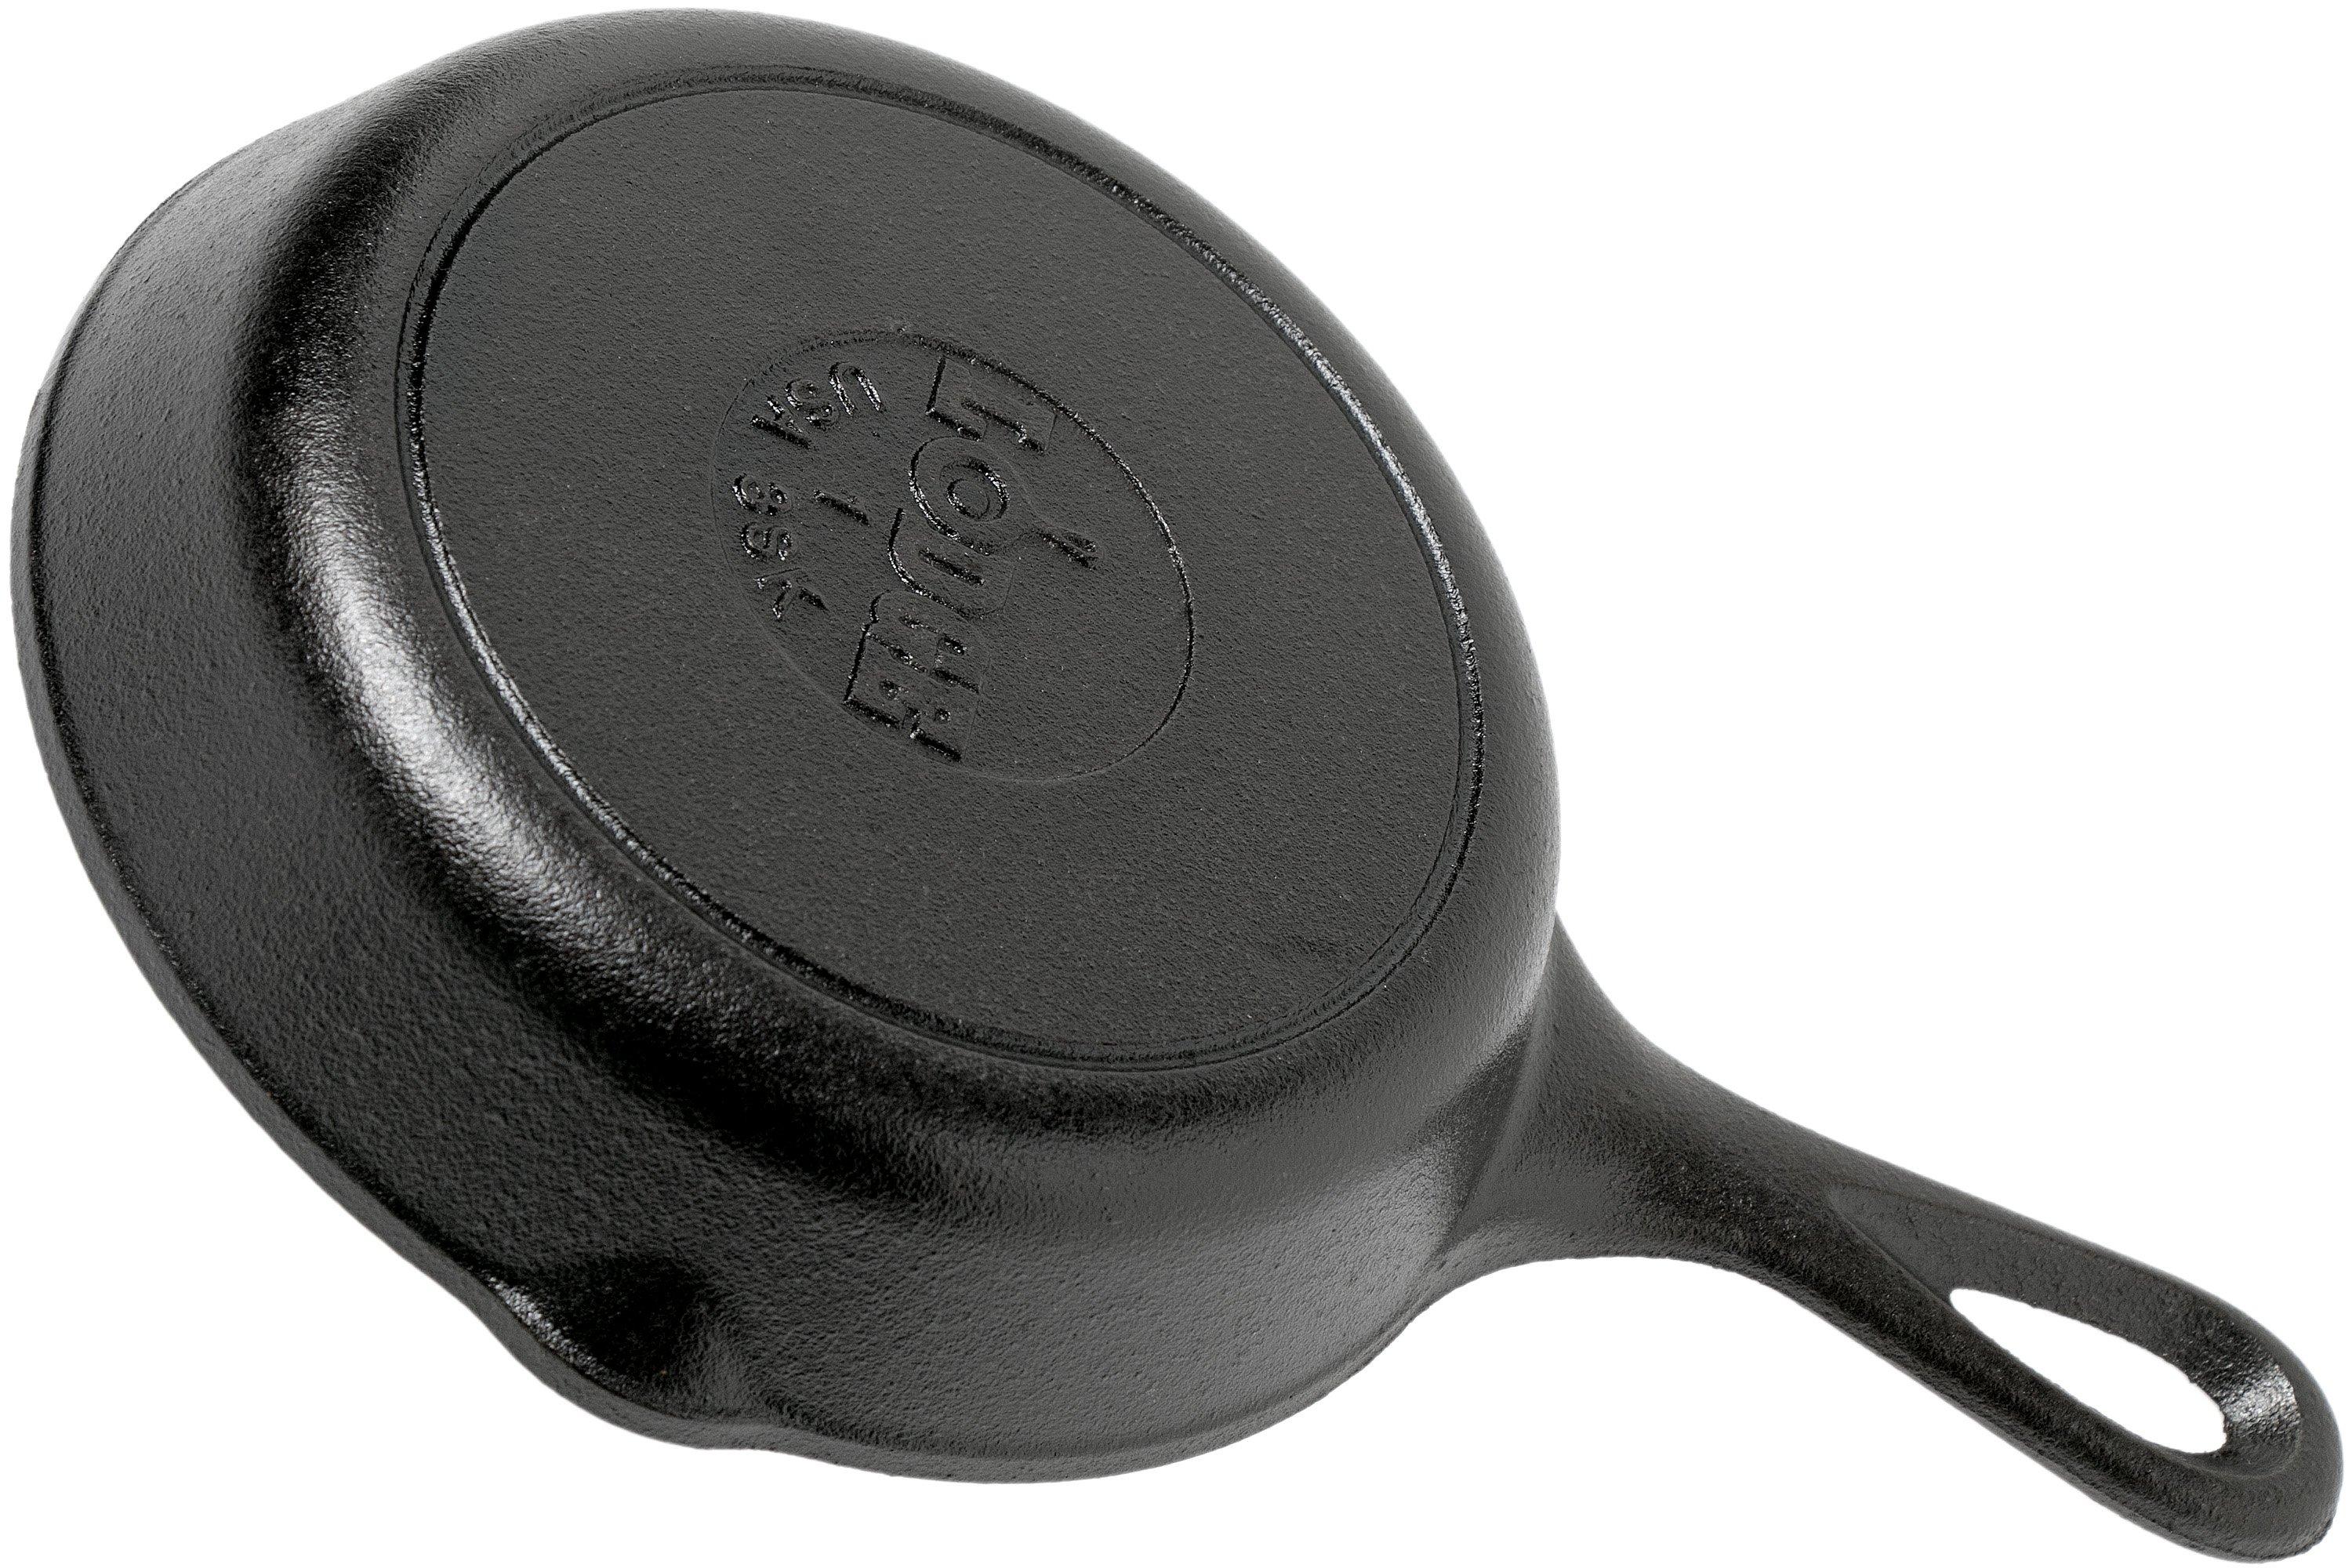 Lodge Classic Cast Iron frying pan L3SK3, diameter approx. 17 cm